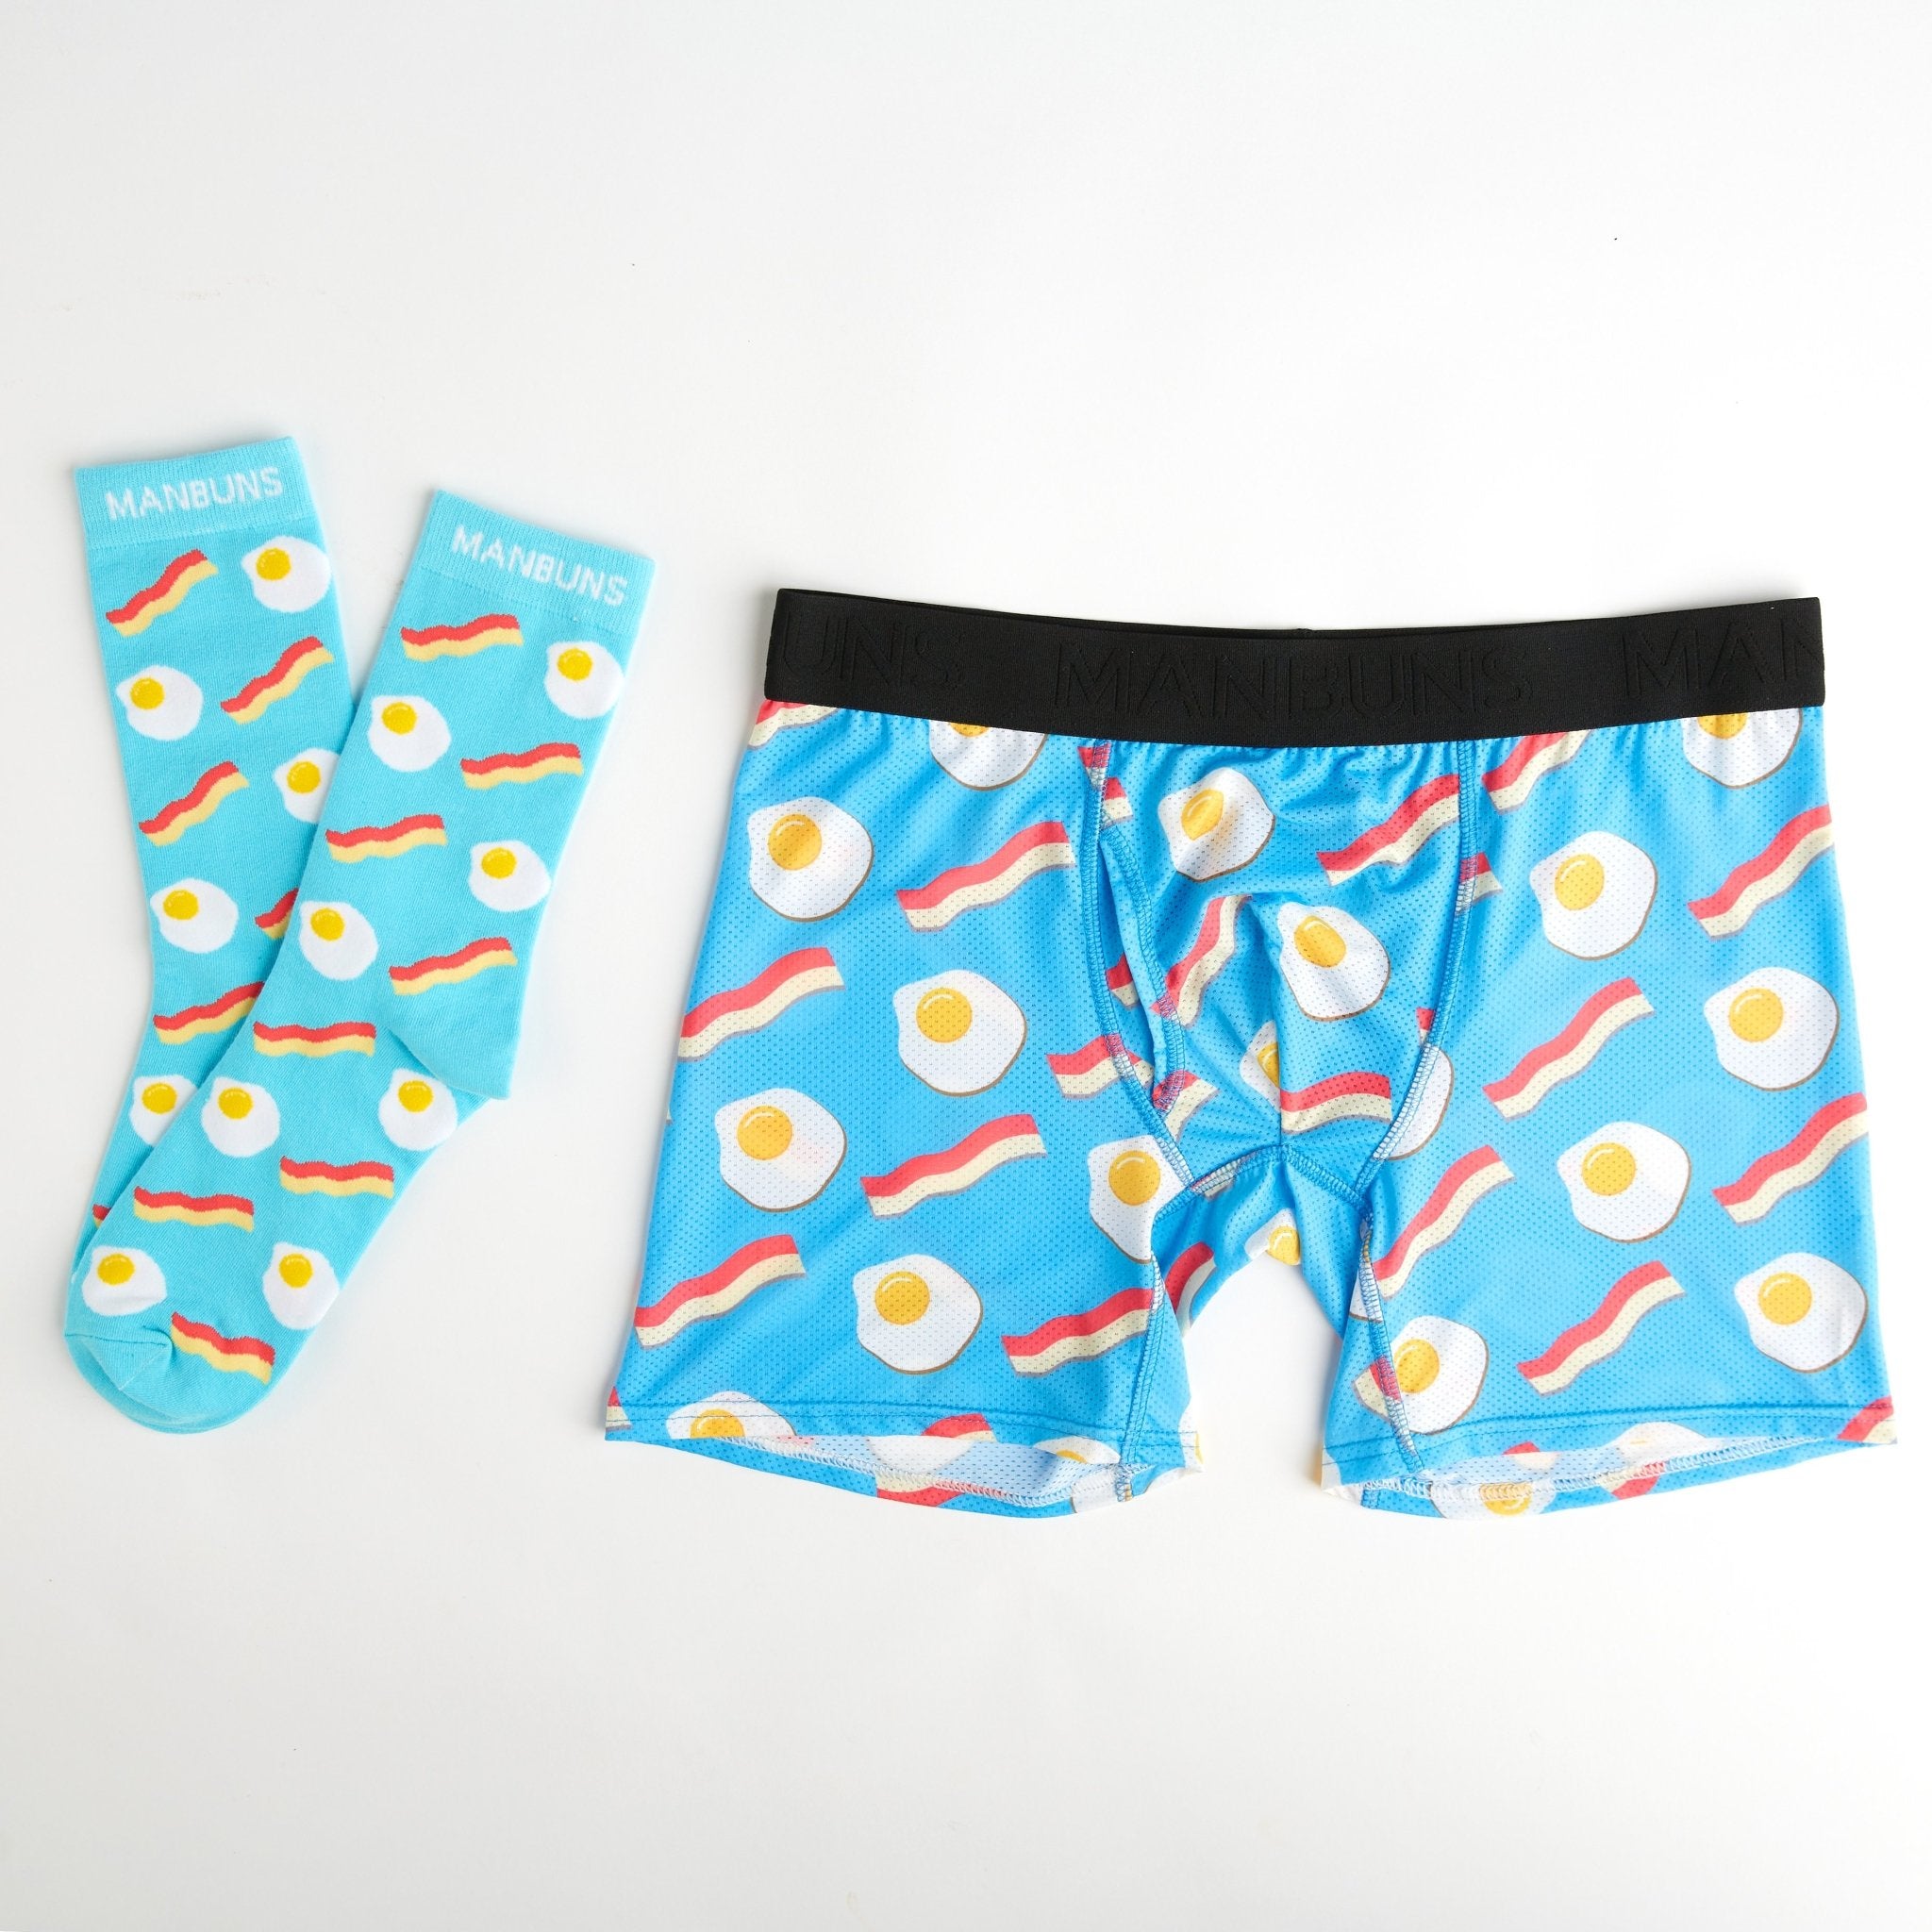 Men's Underwear and Socks Matching Set – MANBUNS